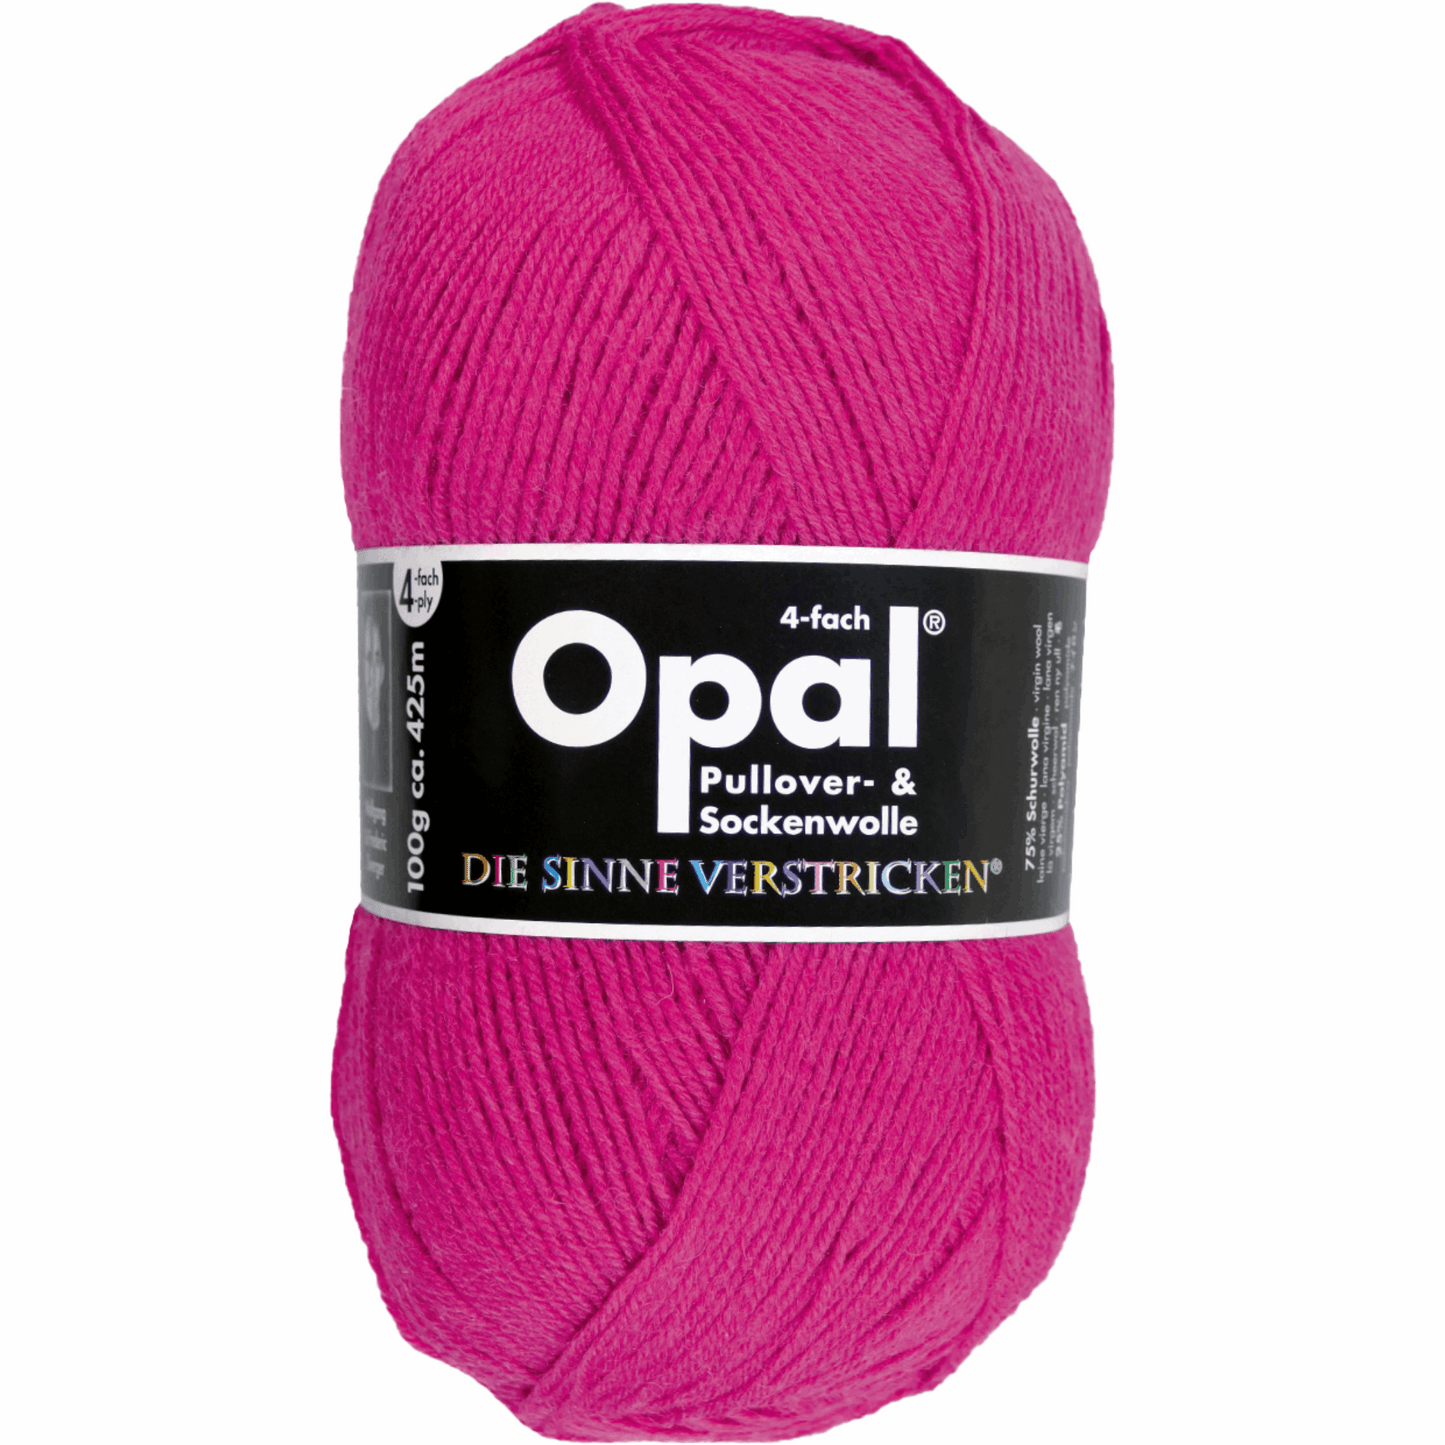 Opal uni 4fädig. 100g 2011/12, 97760, Farbe pink 5194